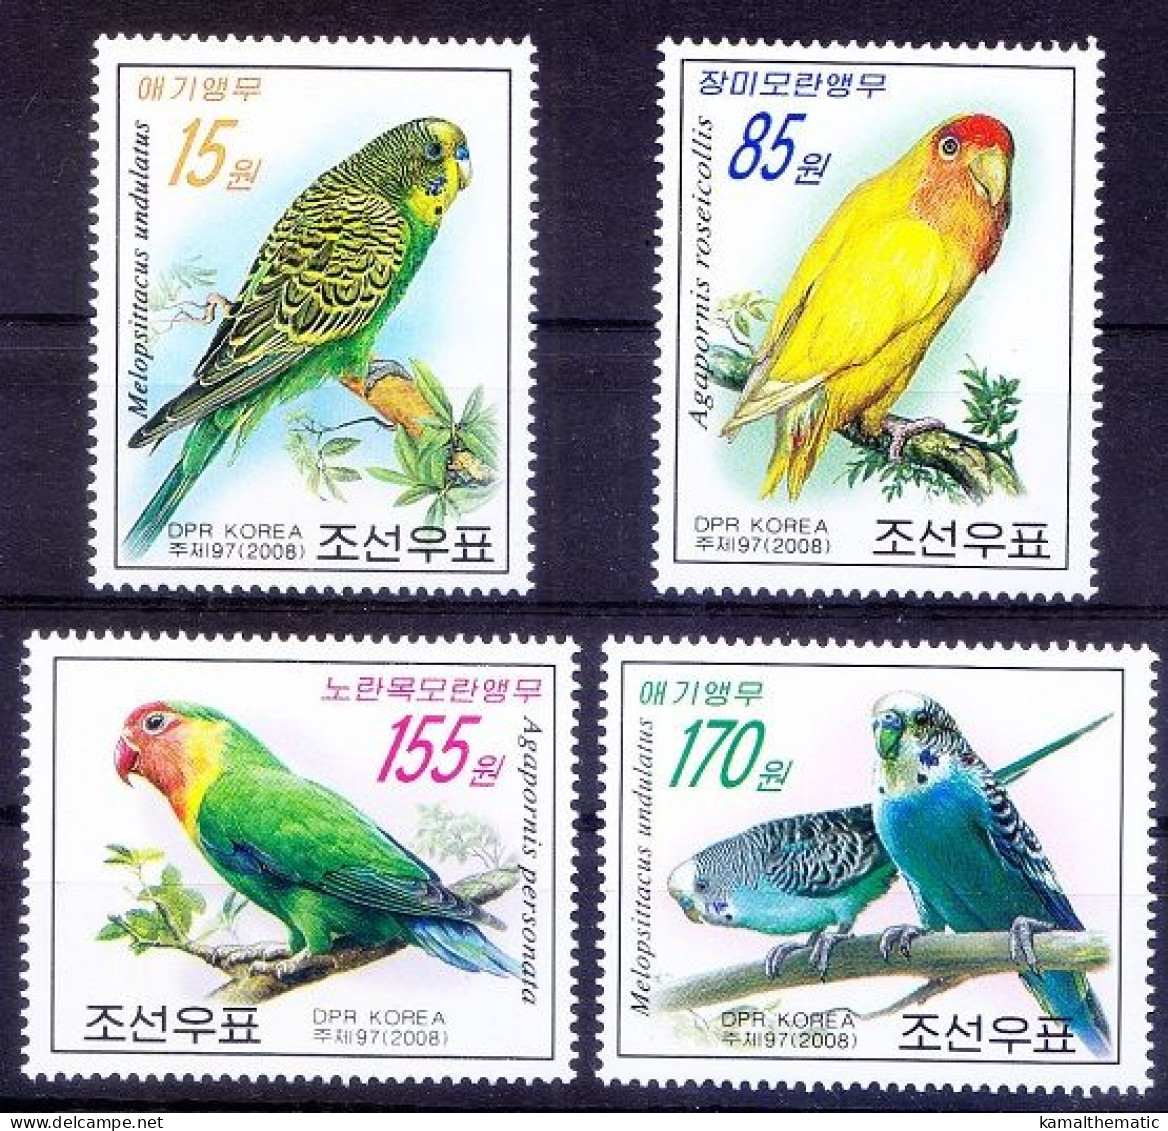 Parrots, Birds, Korea 2008 MNH 4v - Papageien